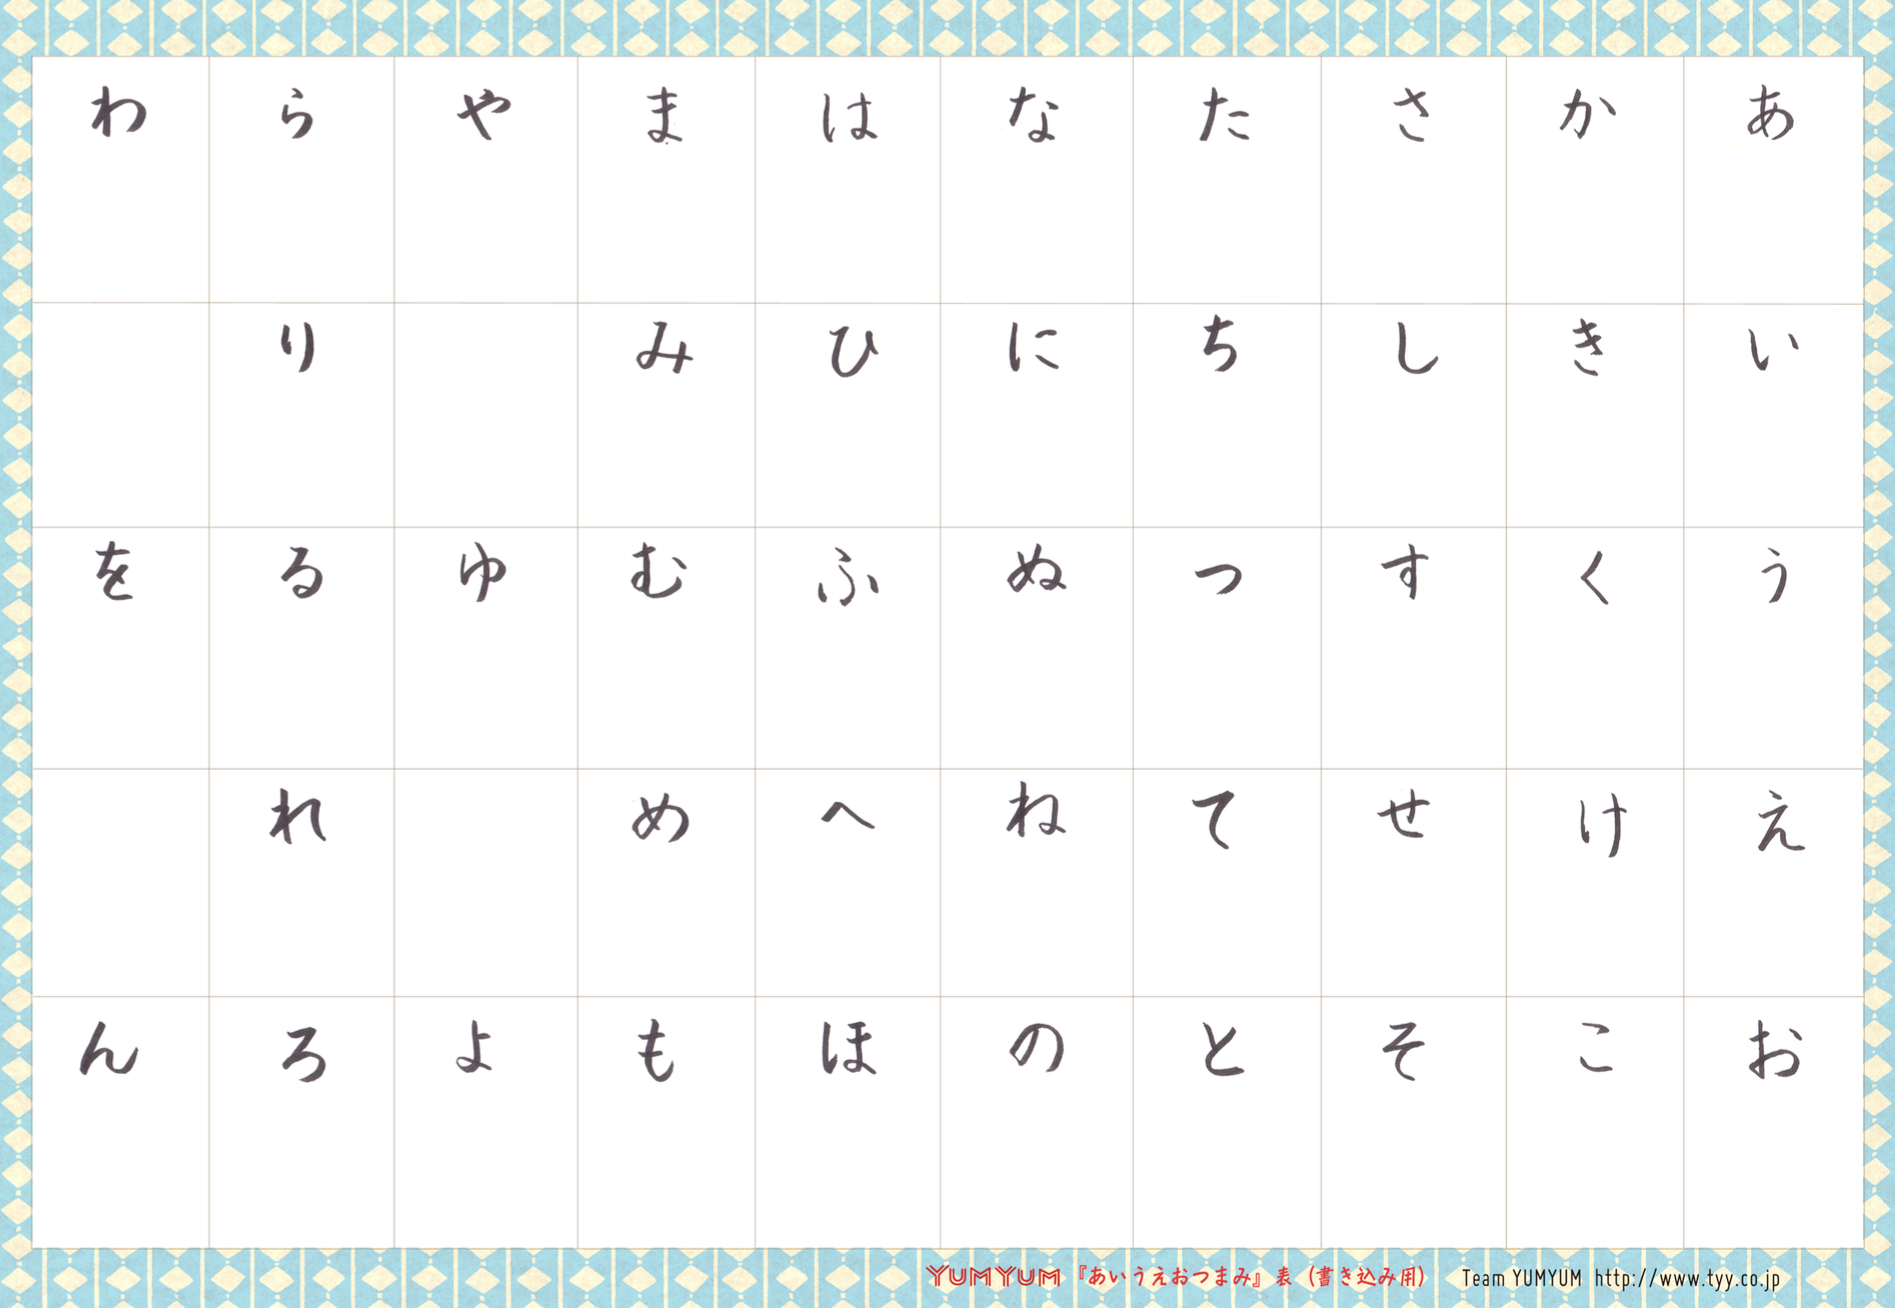 Team YumYum's Hiragana Chart, Pins, Et cetera.